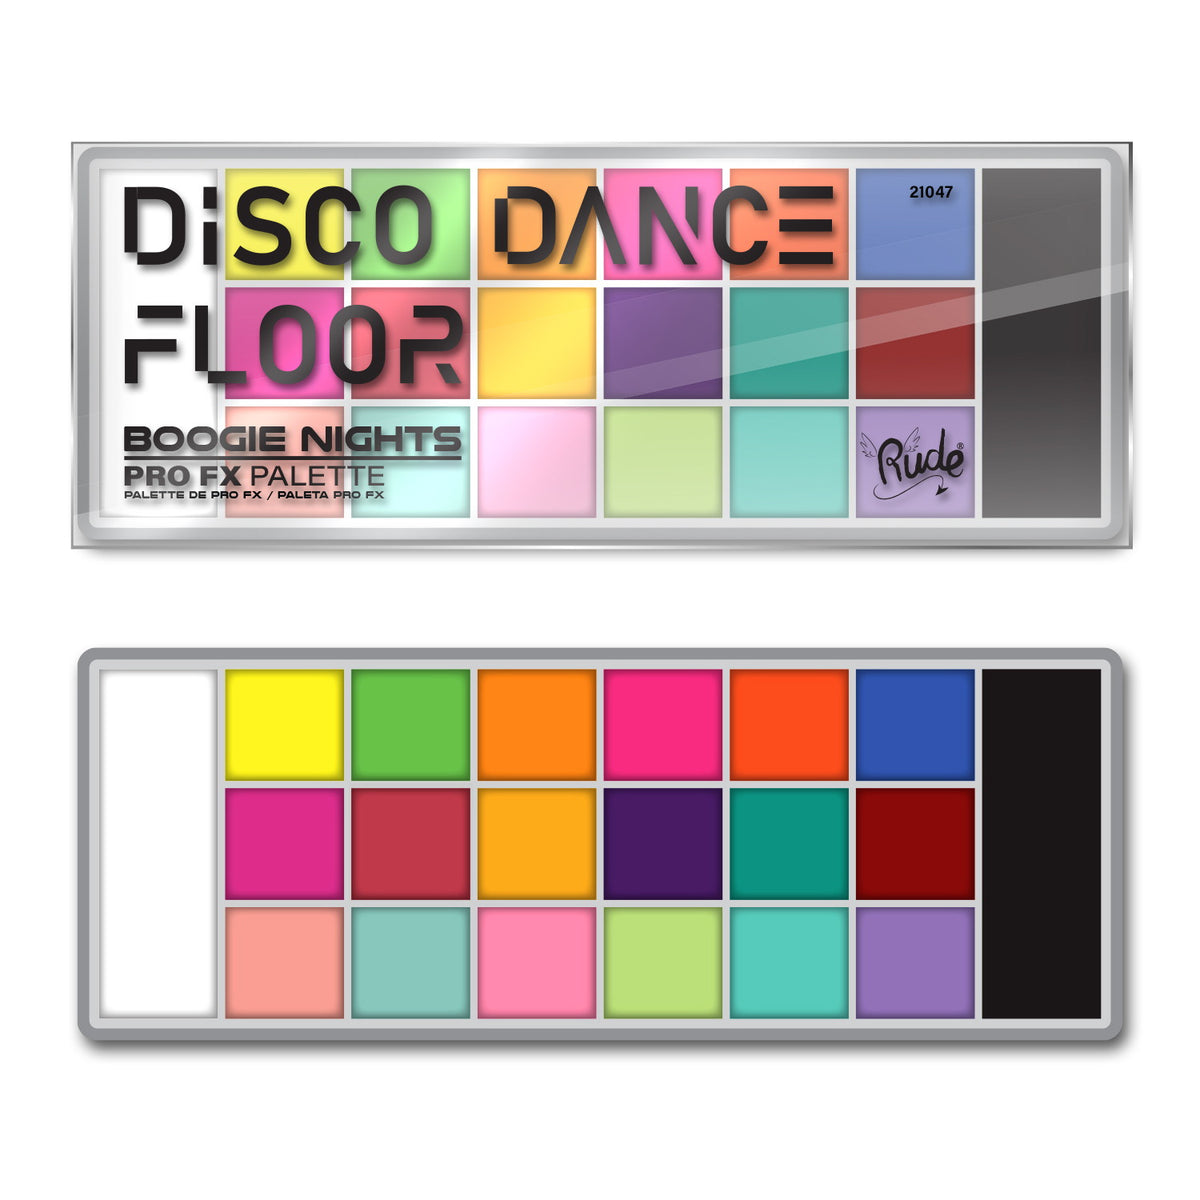 Disco Dance Floor Pro FX Palette - Boogie Nights